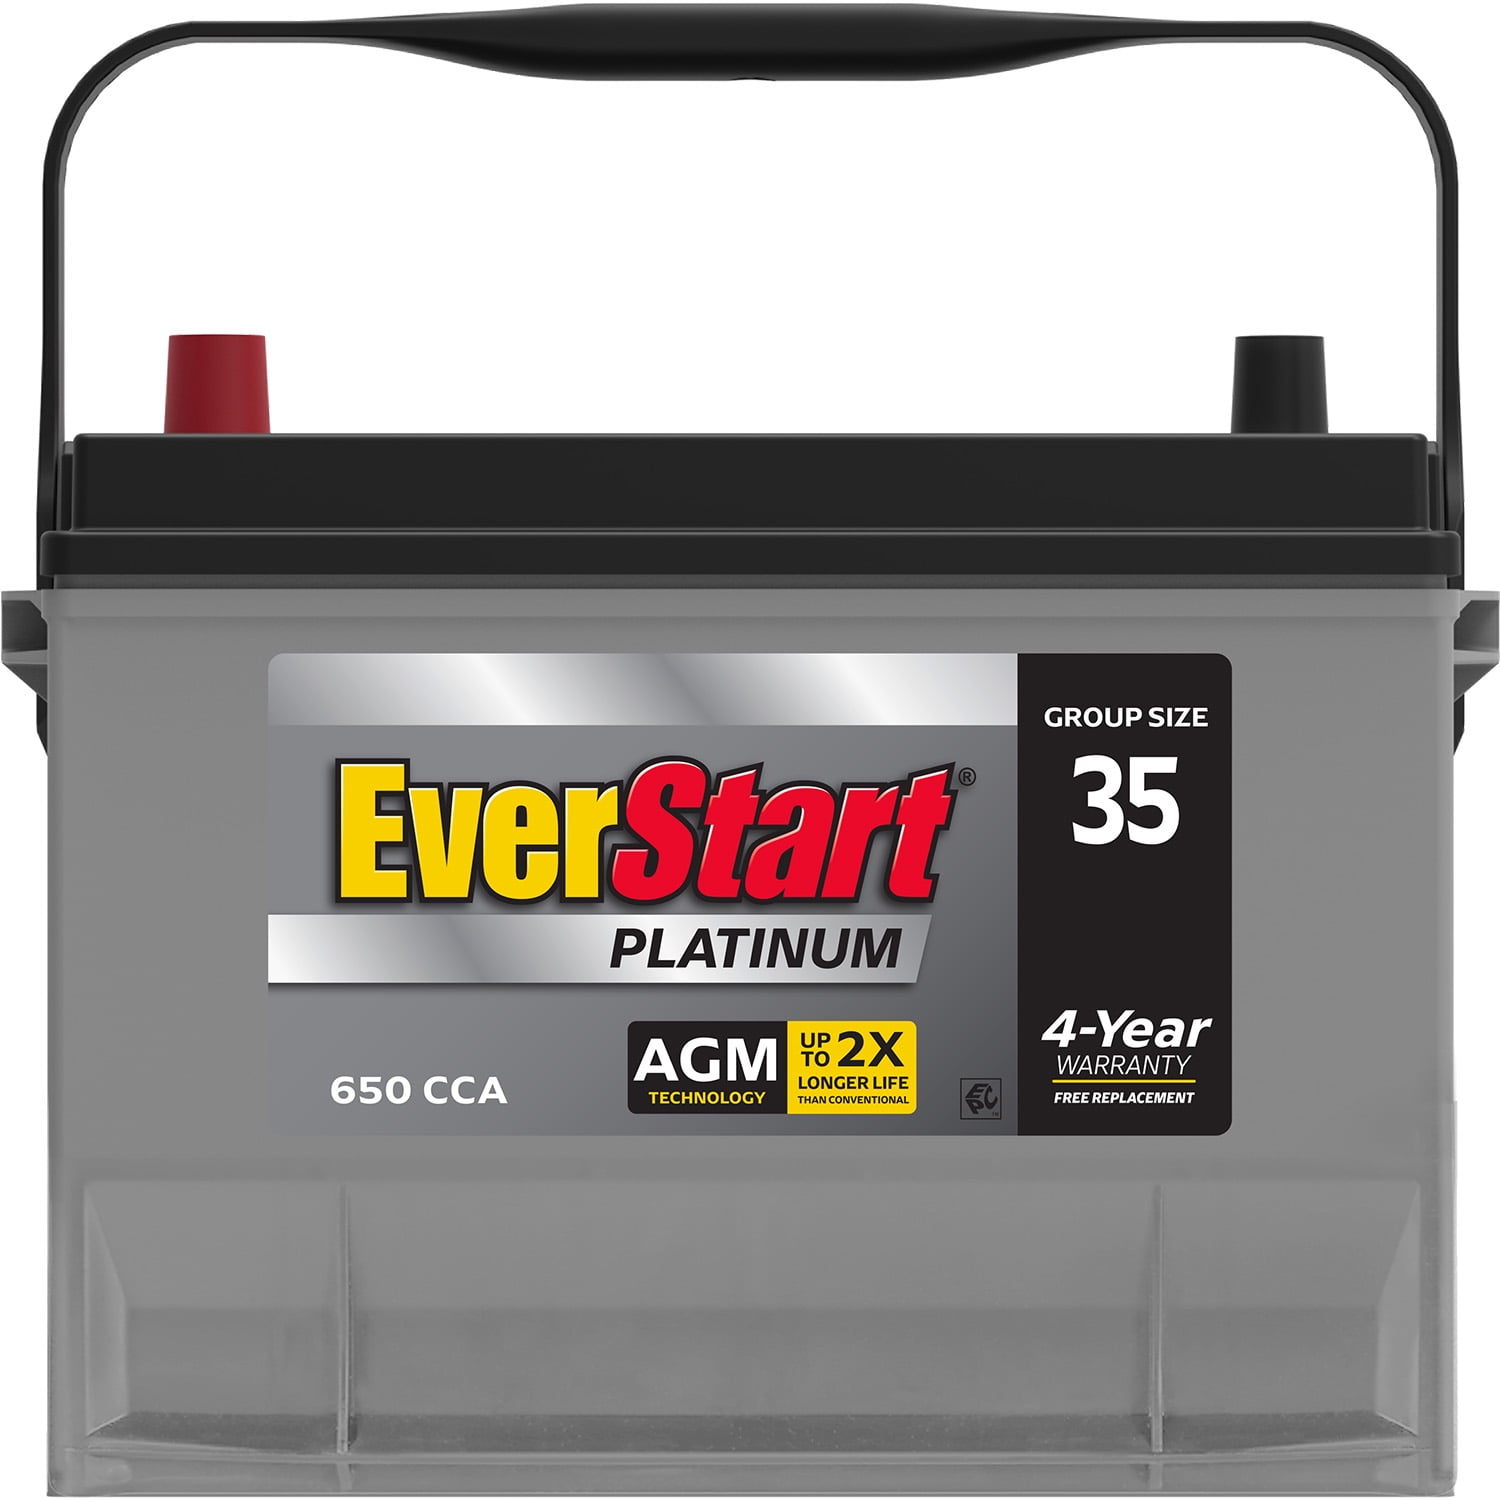 EverStart Platinum AGM Automotive Battery, Group Size 35 12 Volt